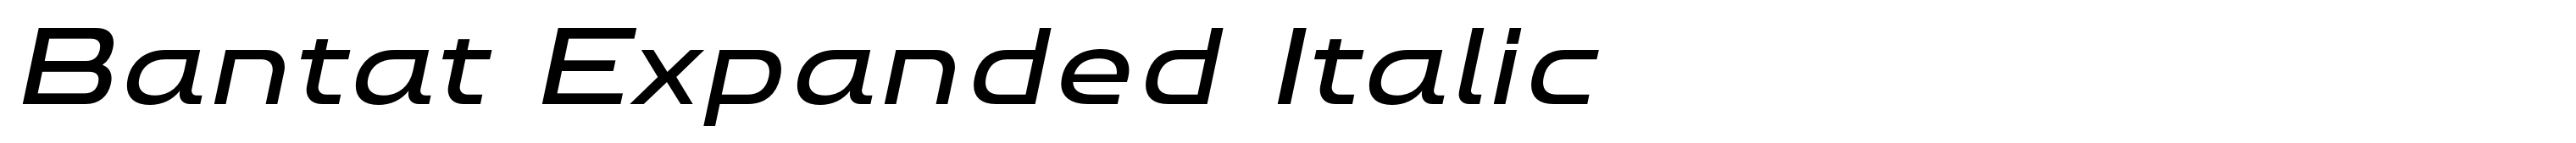 Bantat Expanded Italic